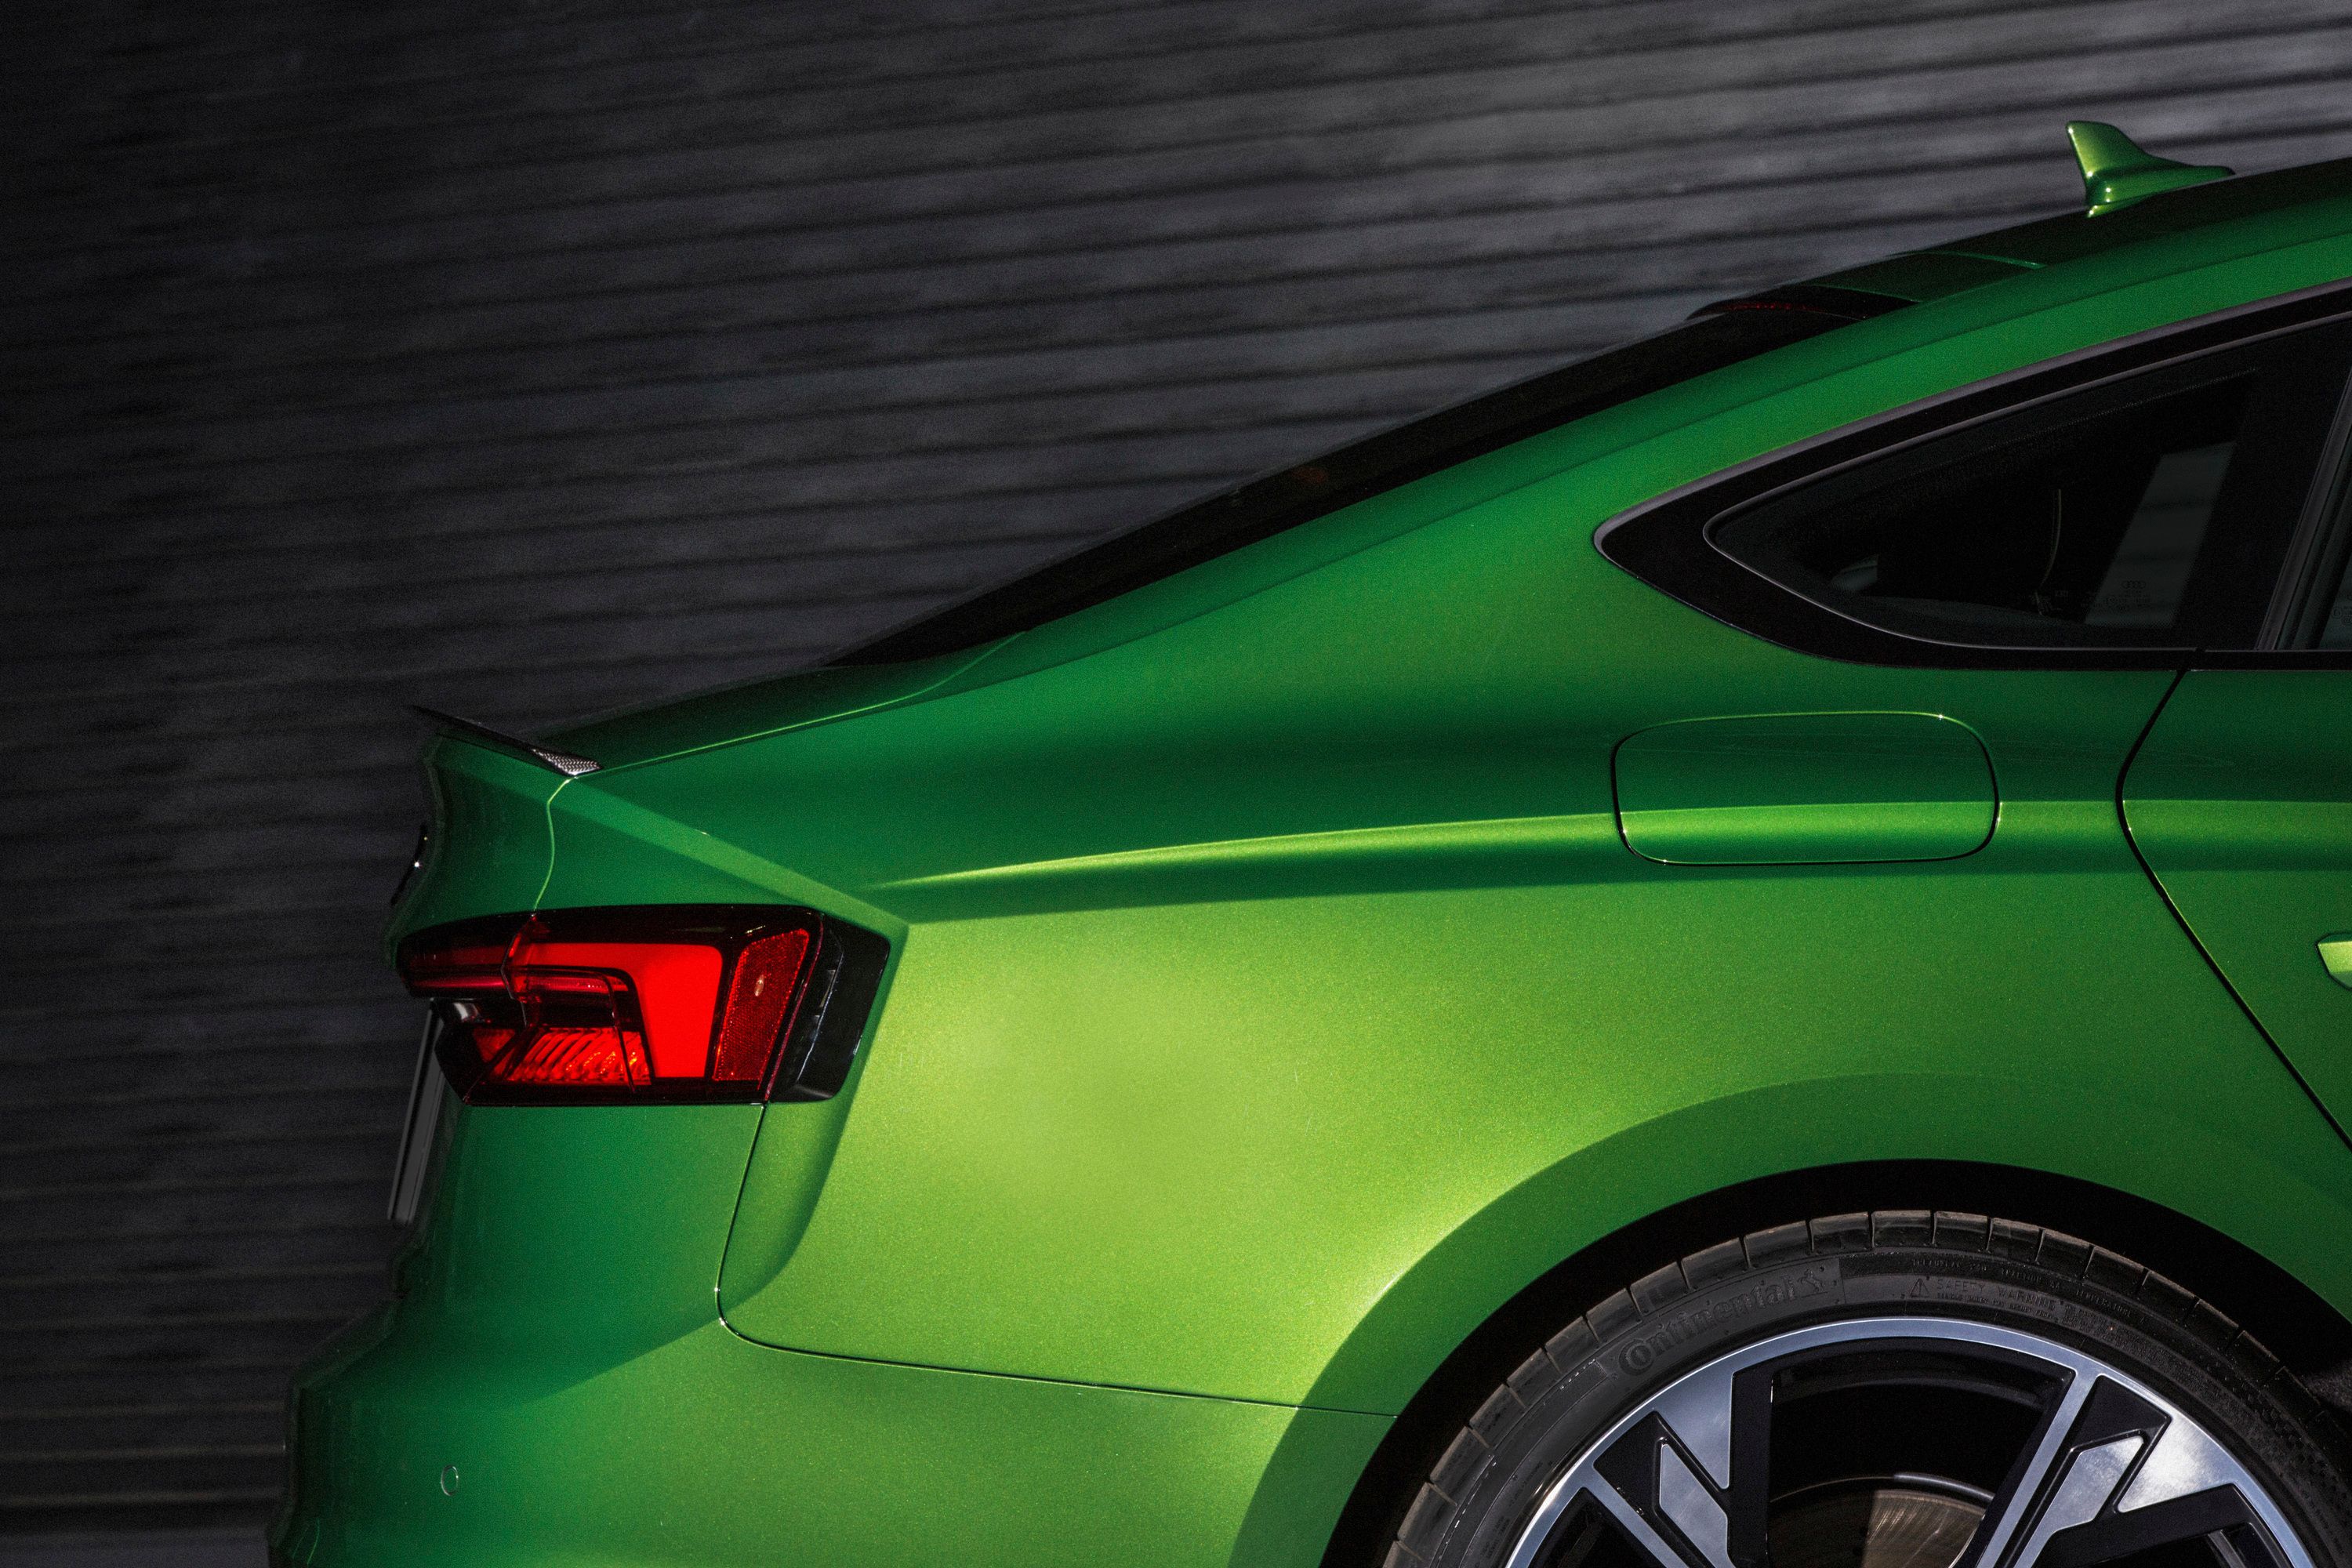 2019 Audi RS5 Sportback